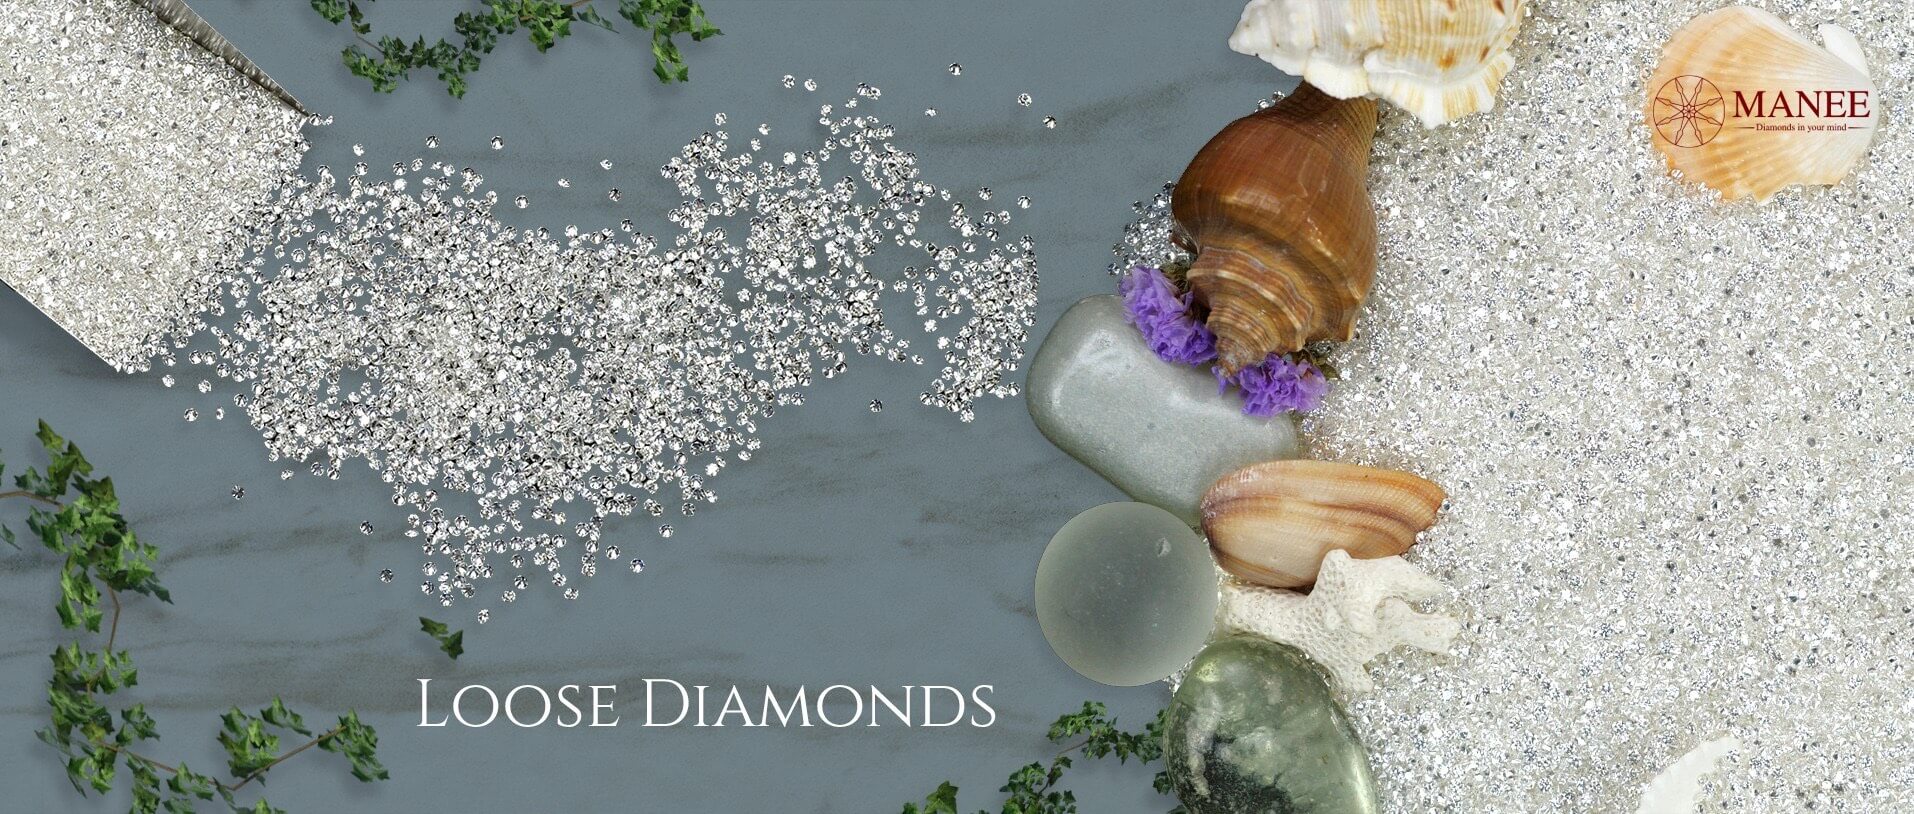 Buy Loose Diamonds Online - Diamonds By Manee